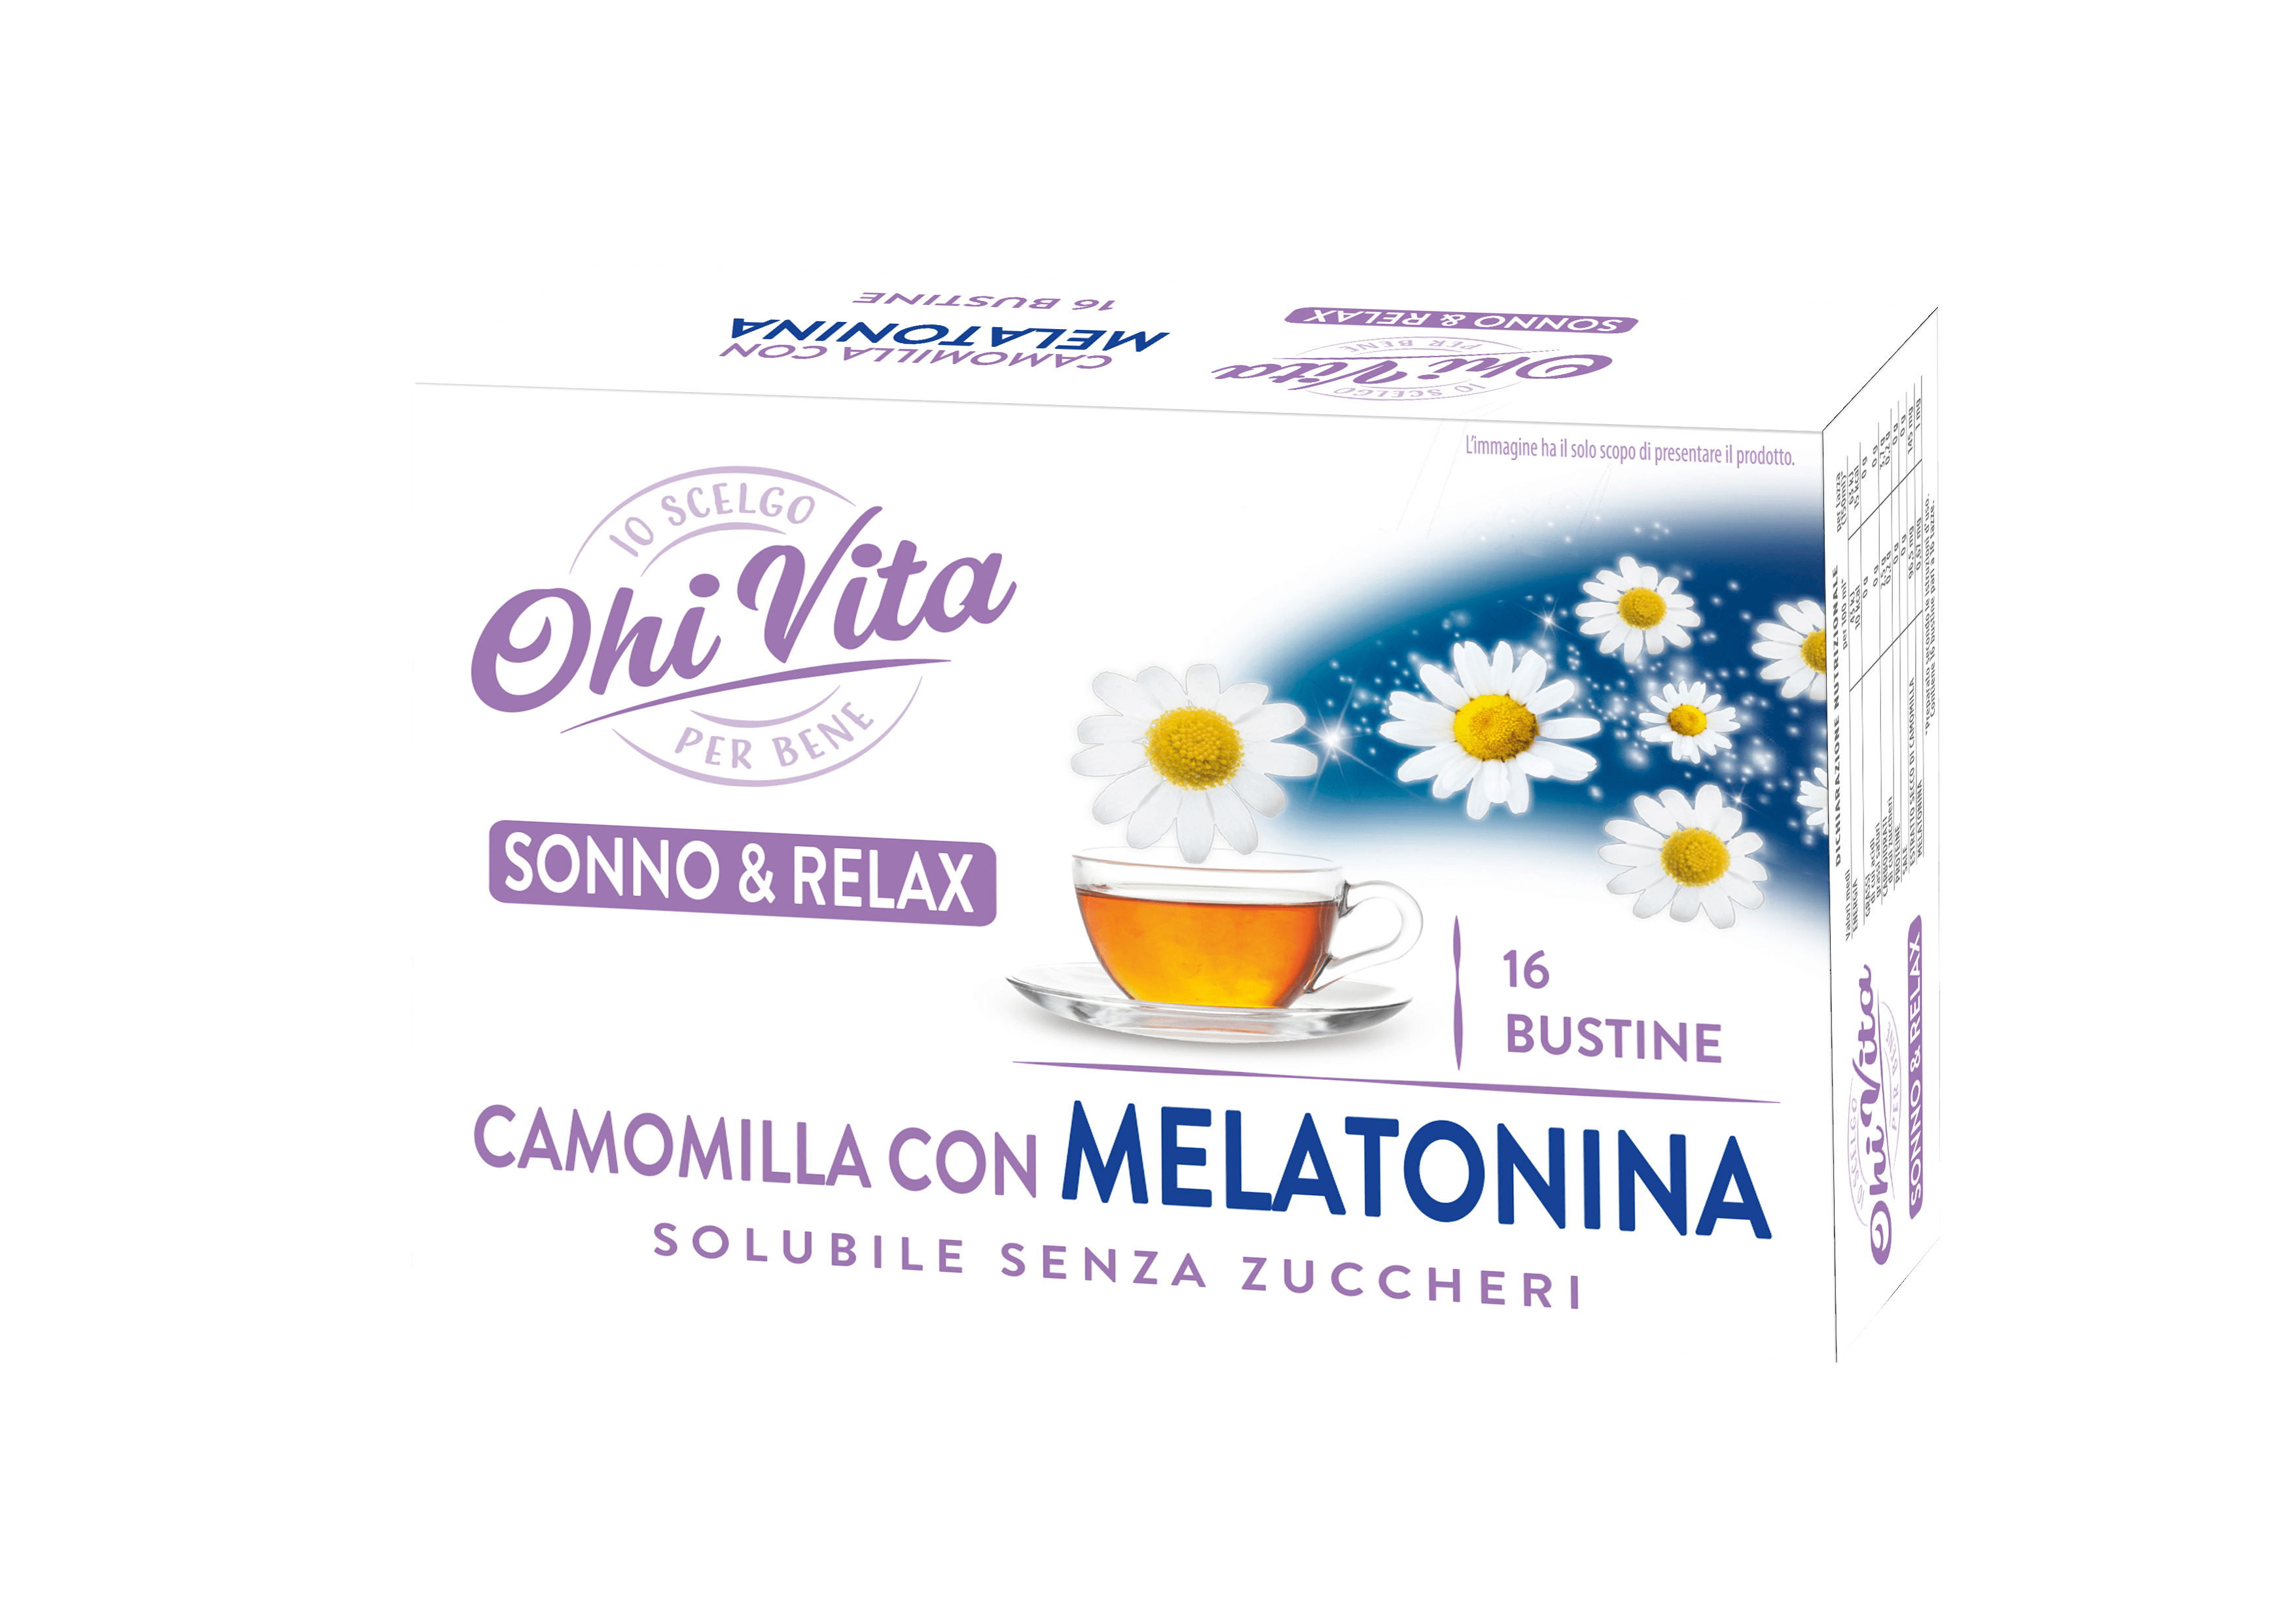 Camomilla con melatonina Box